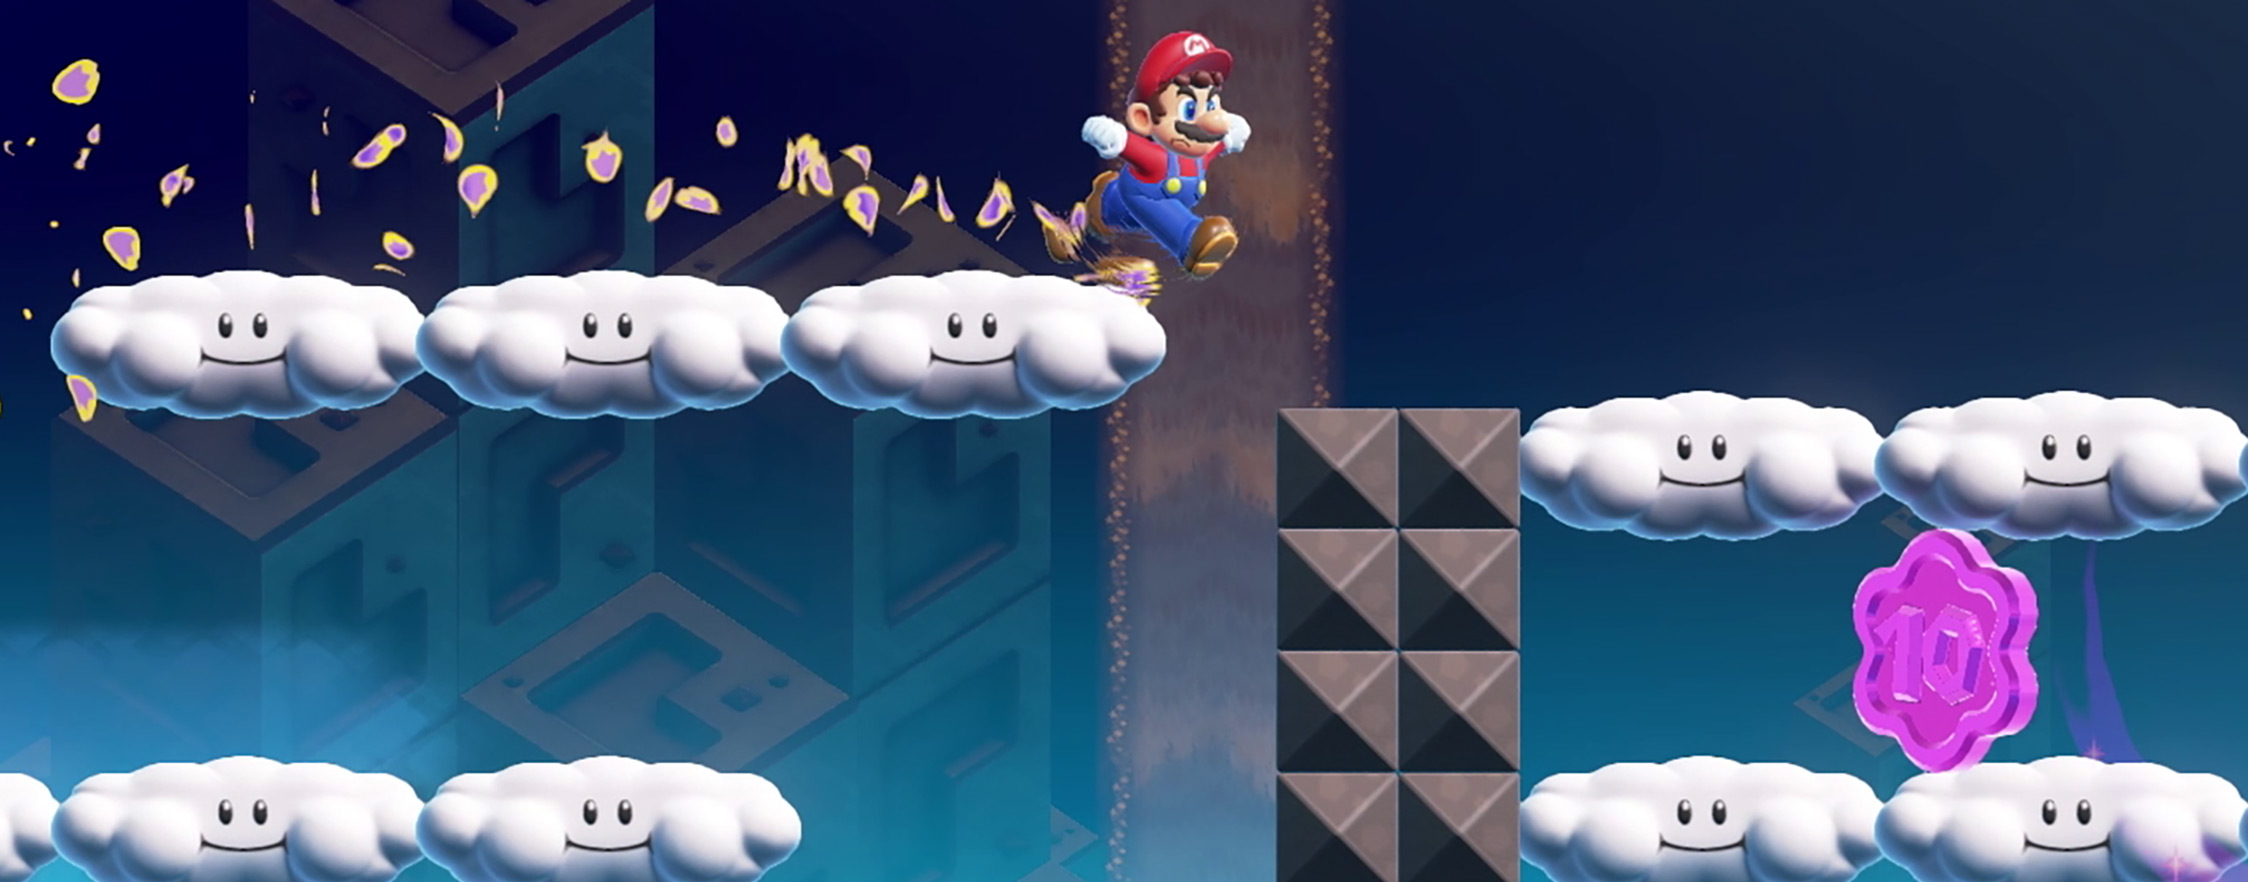 Super Mario Bros. Wonder Tops This Week's Nintendo Switch eShop